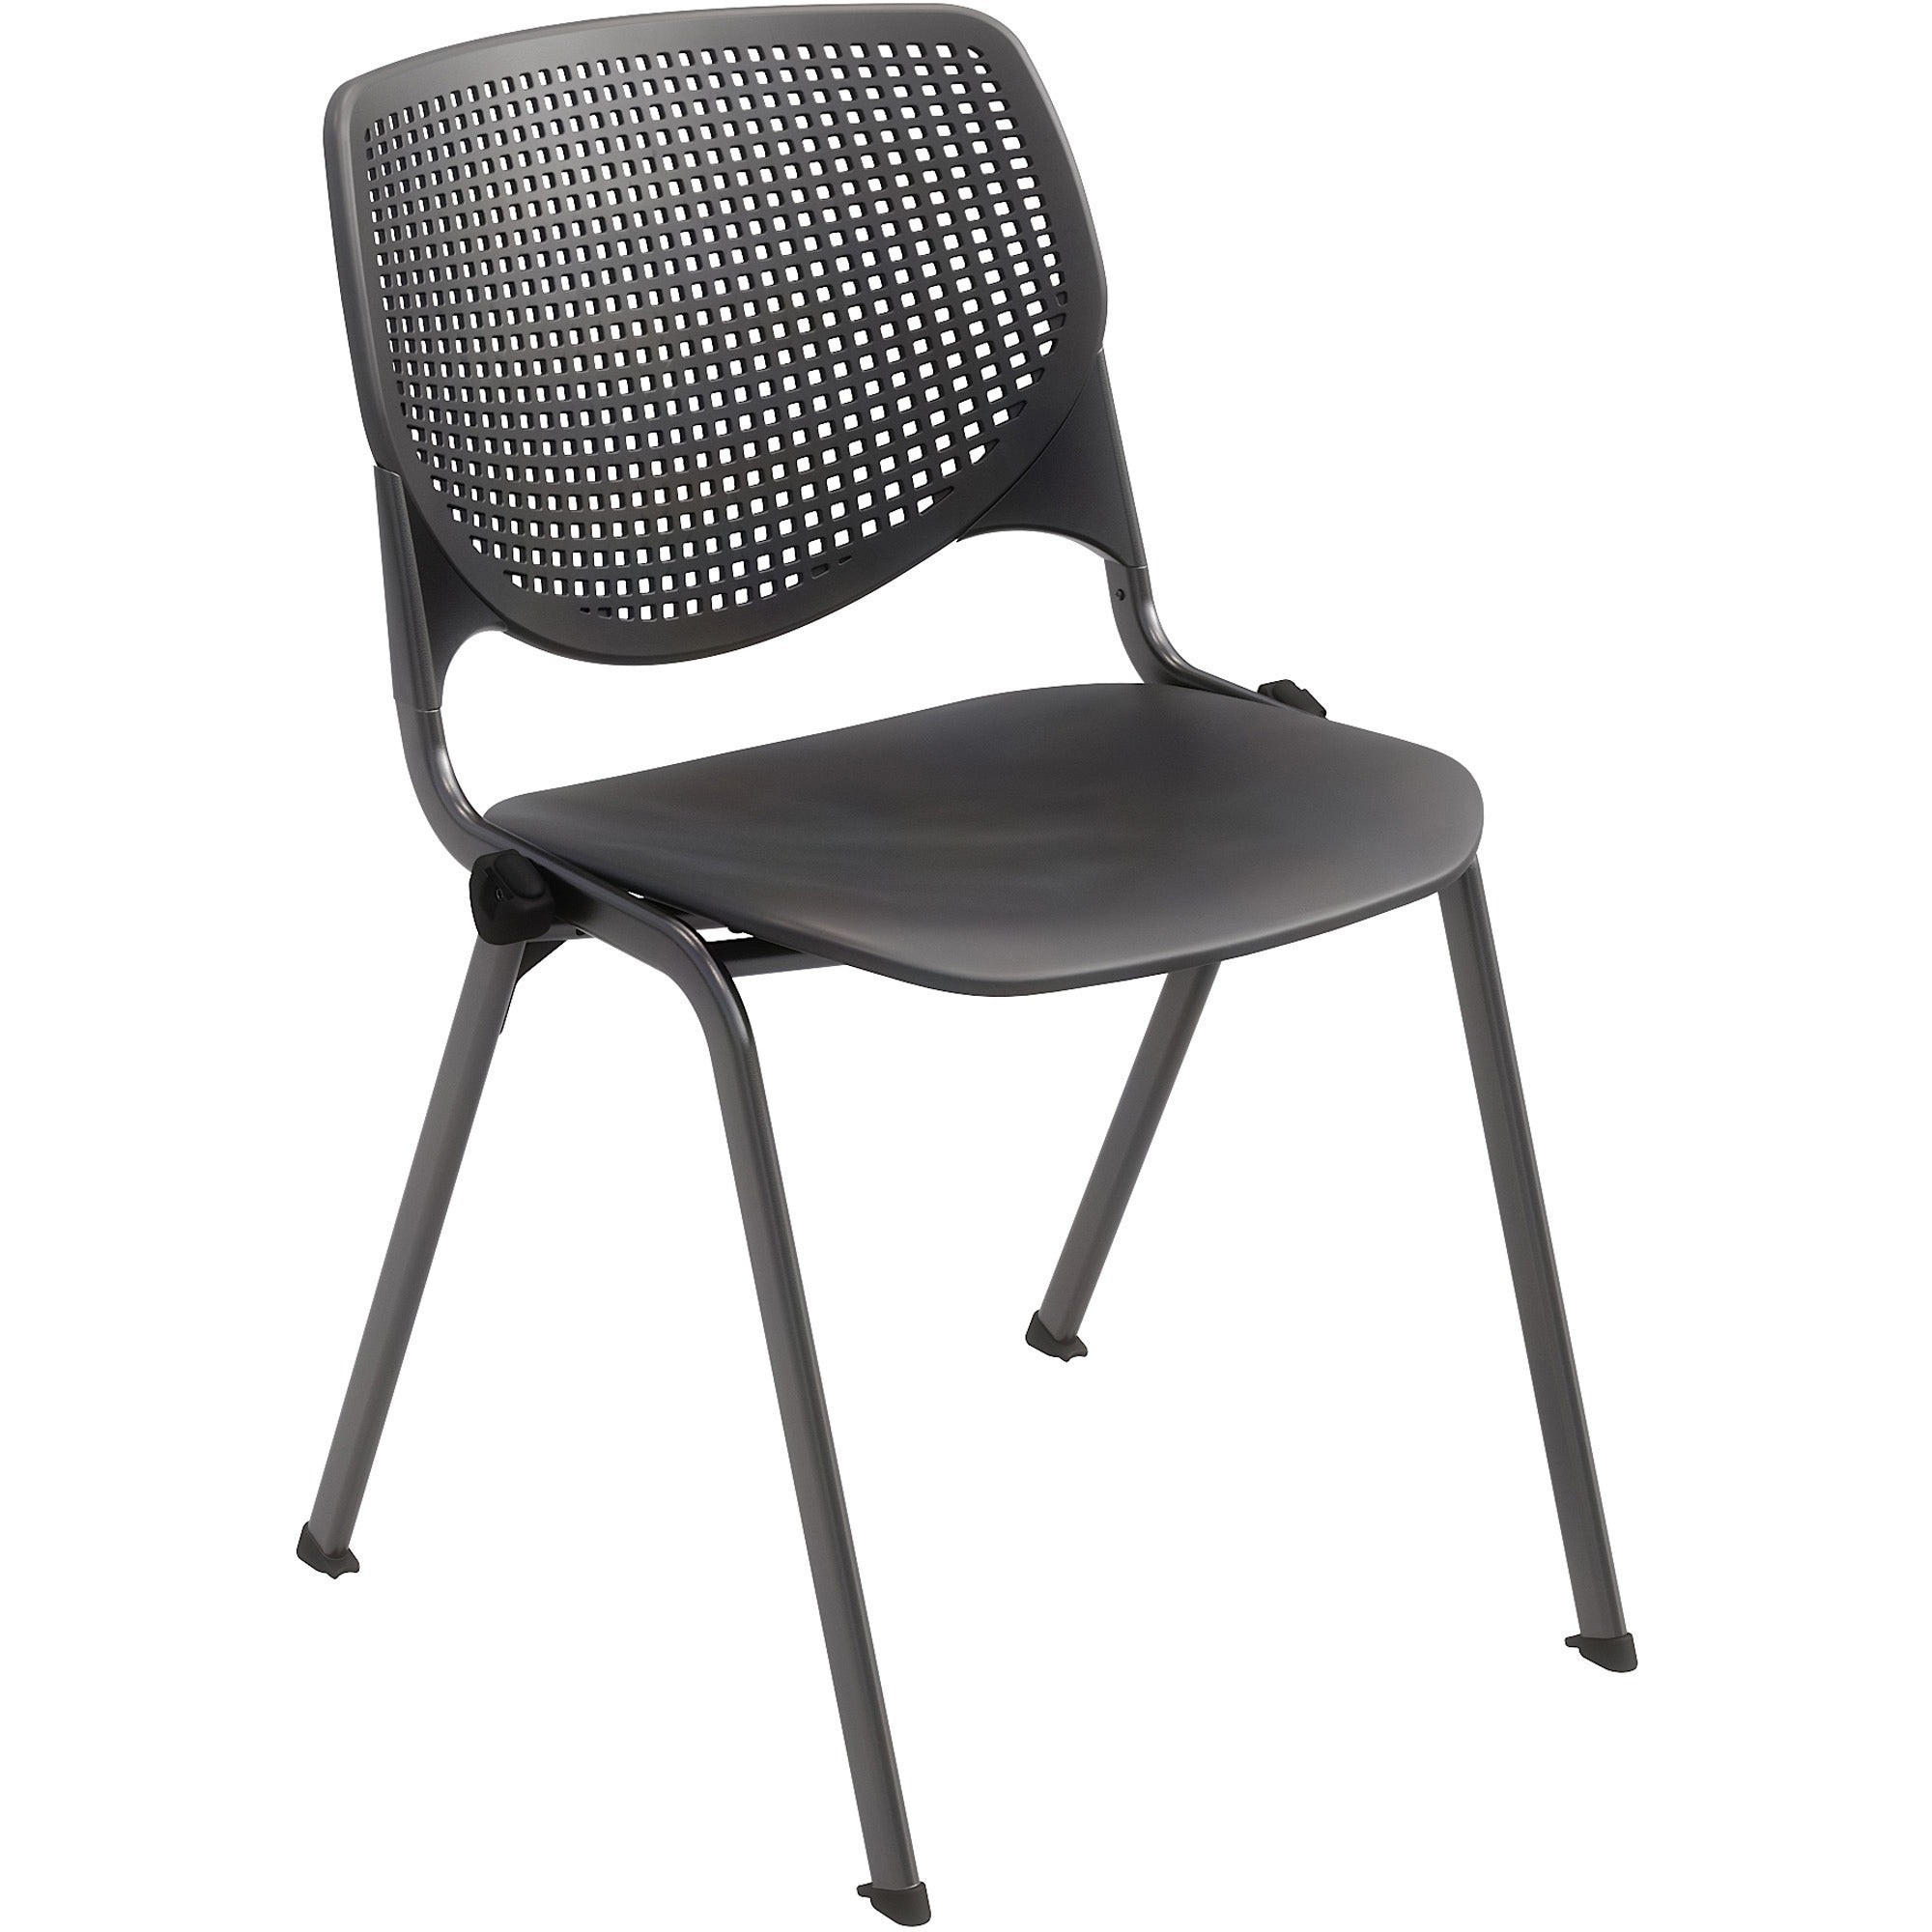 kfi-stacking-chair-black-polypropylene-seat-black-polypropylene-back-steel-frame-four-legged-base-1-each_kfi2300bkp10 - 1